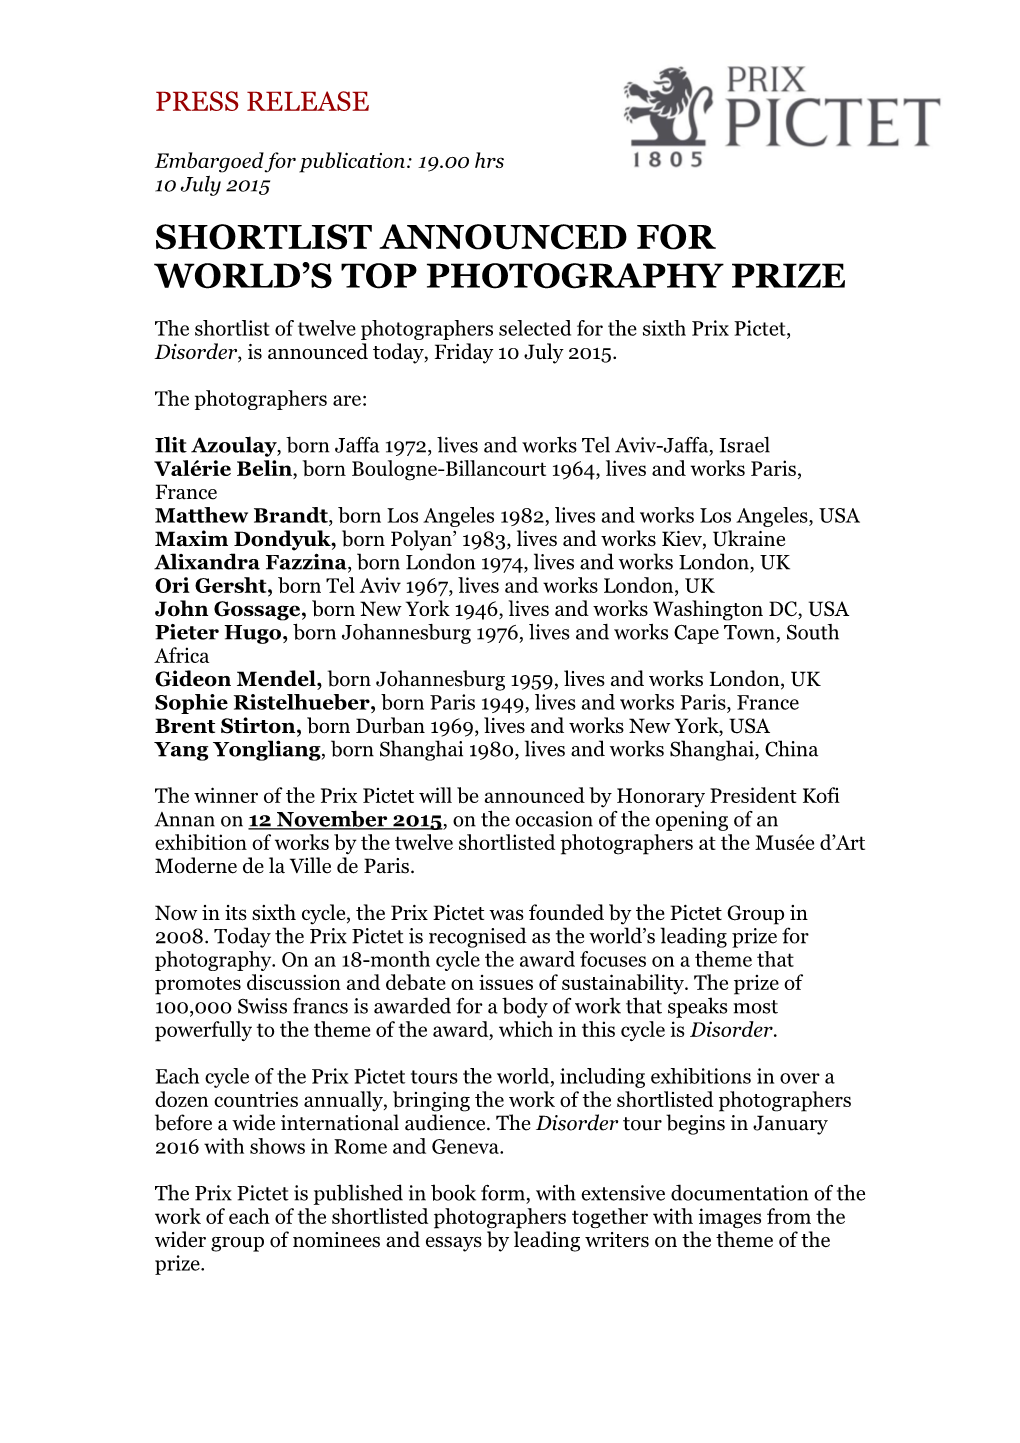 Prix Pictet Disorder Shortlist Press Release English